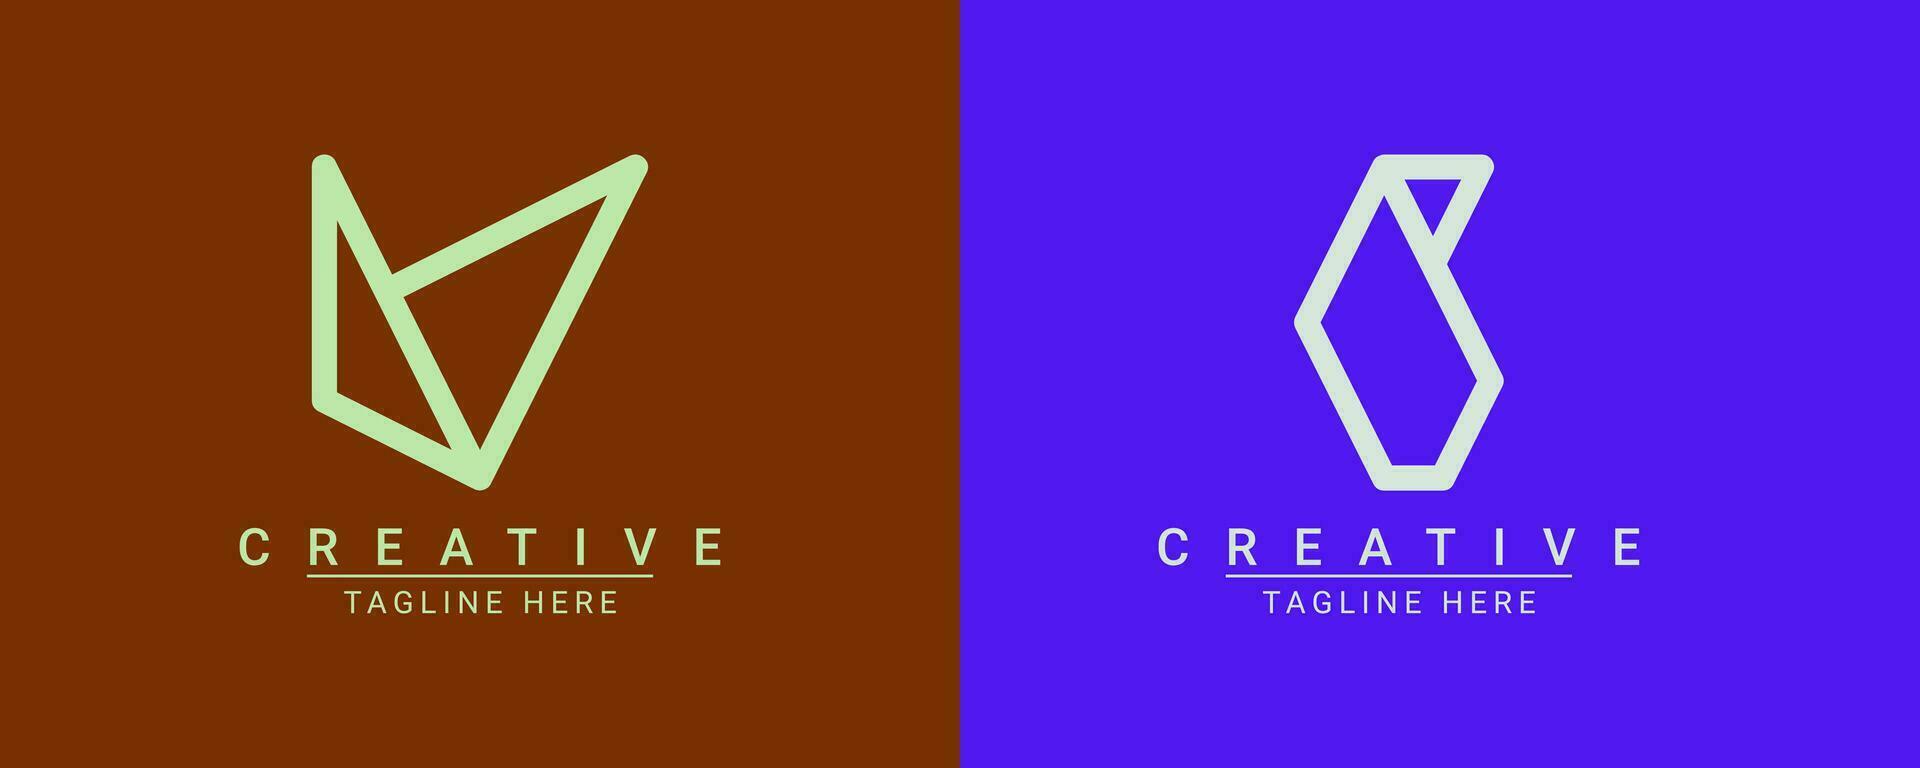 Modern creative minimalist logo design. vector